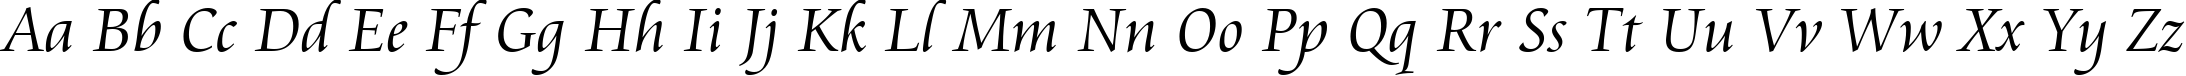 Пример написания английского алфавита шрифтом Cataneo Light BT